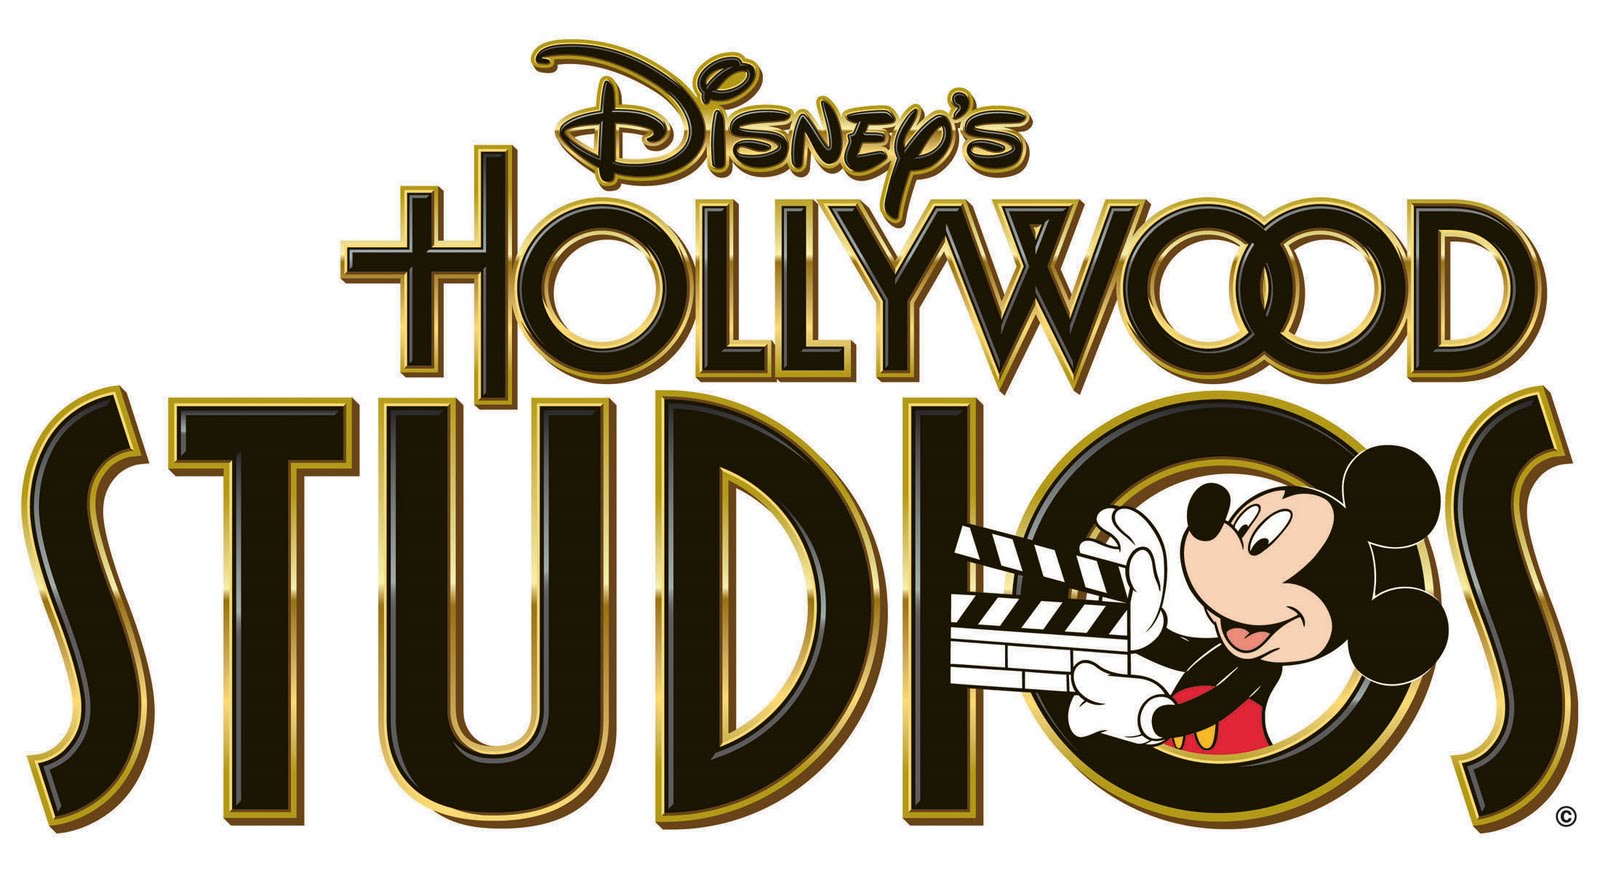 Download Disney epcot Logos